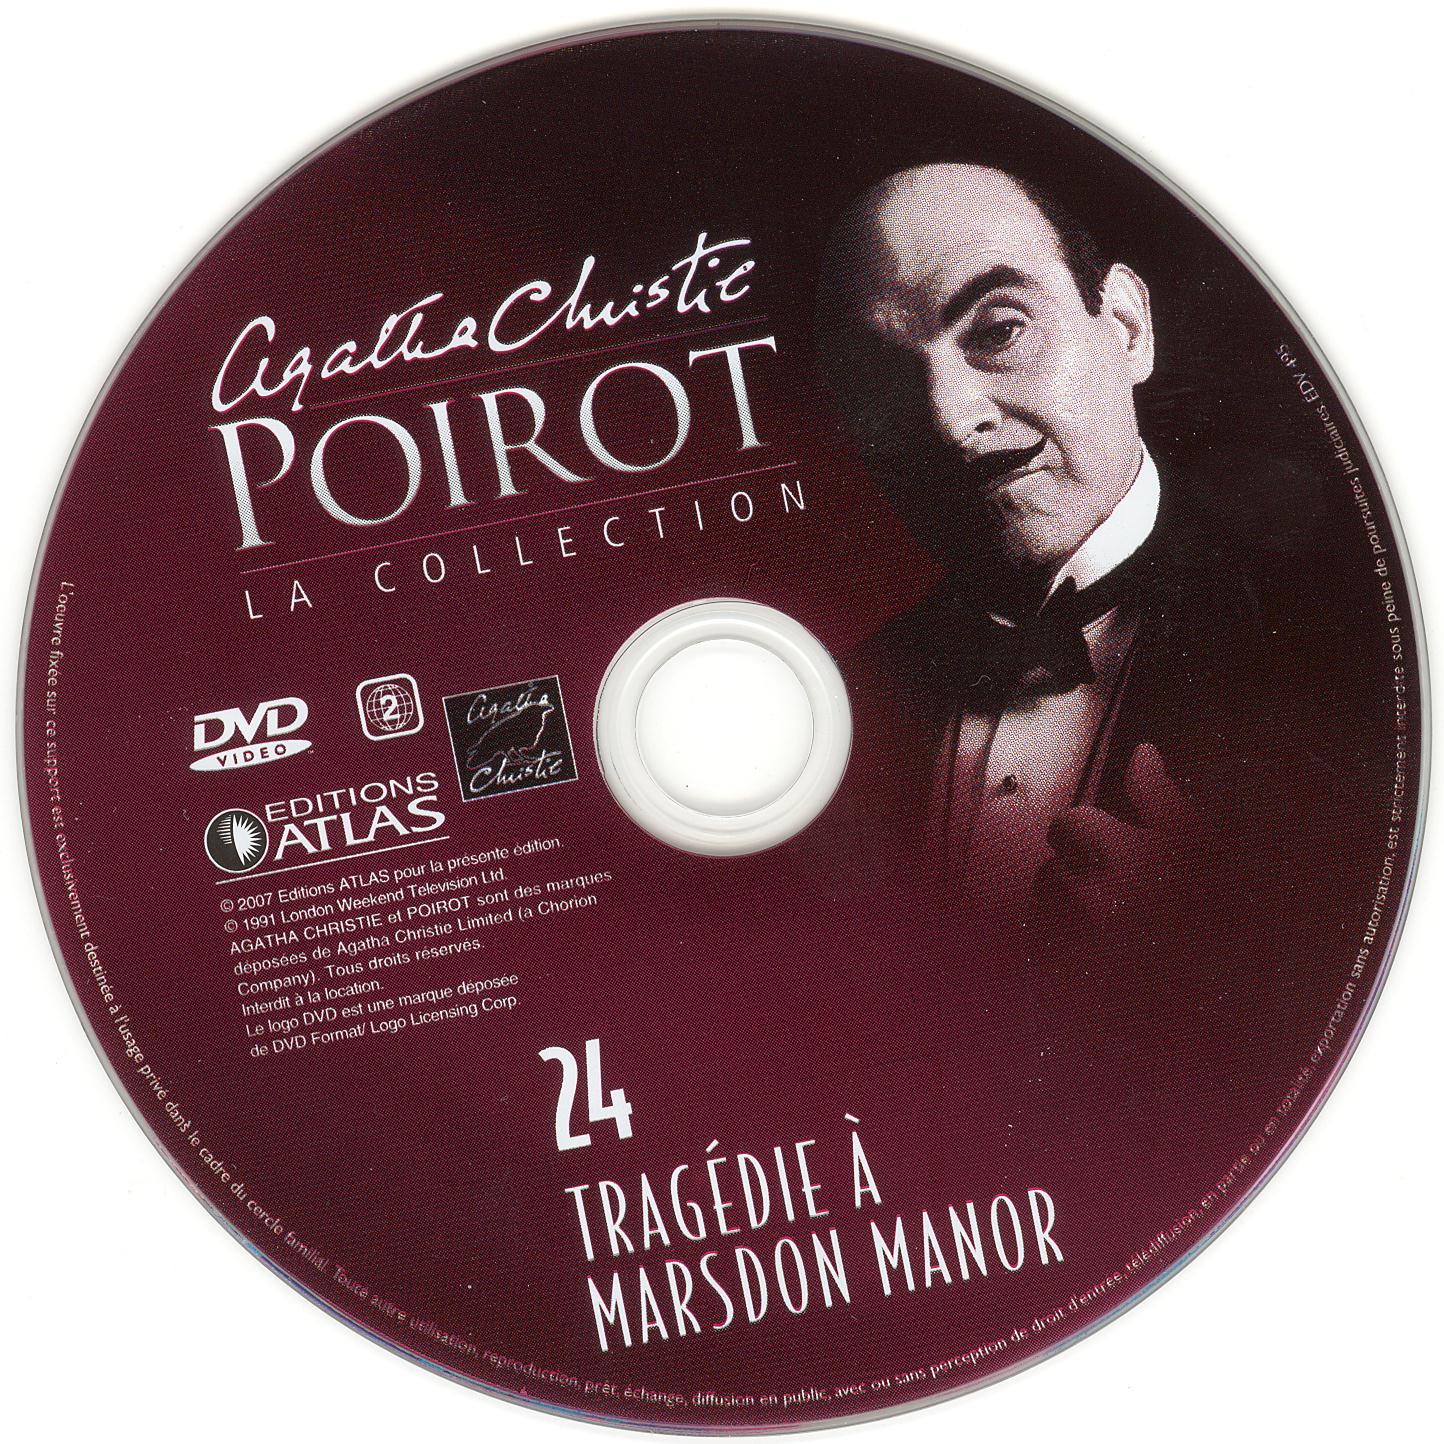 Hercule Poirot vol 24